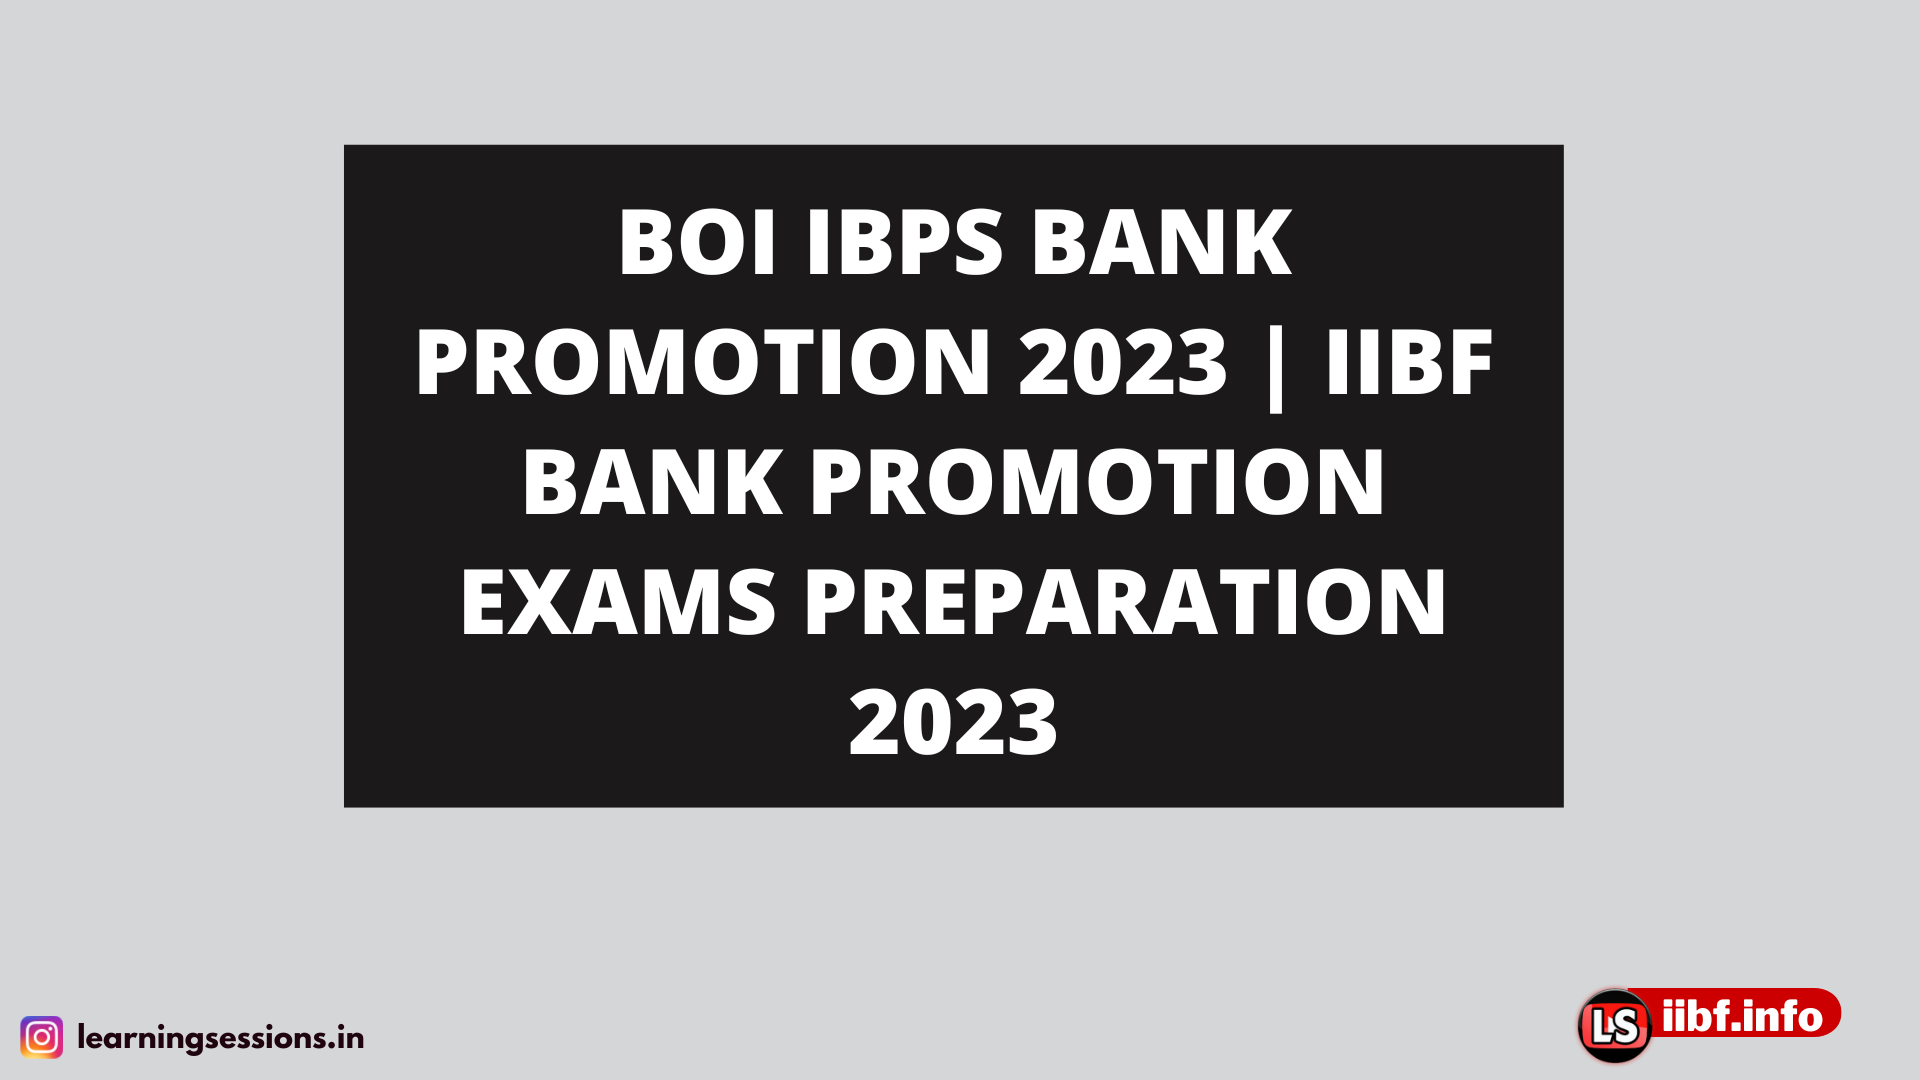 BOI IBPS BANK PROMOTION 2023 | IIBF BANK PROMOTION EXAMS PREPARATION 2023